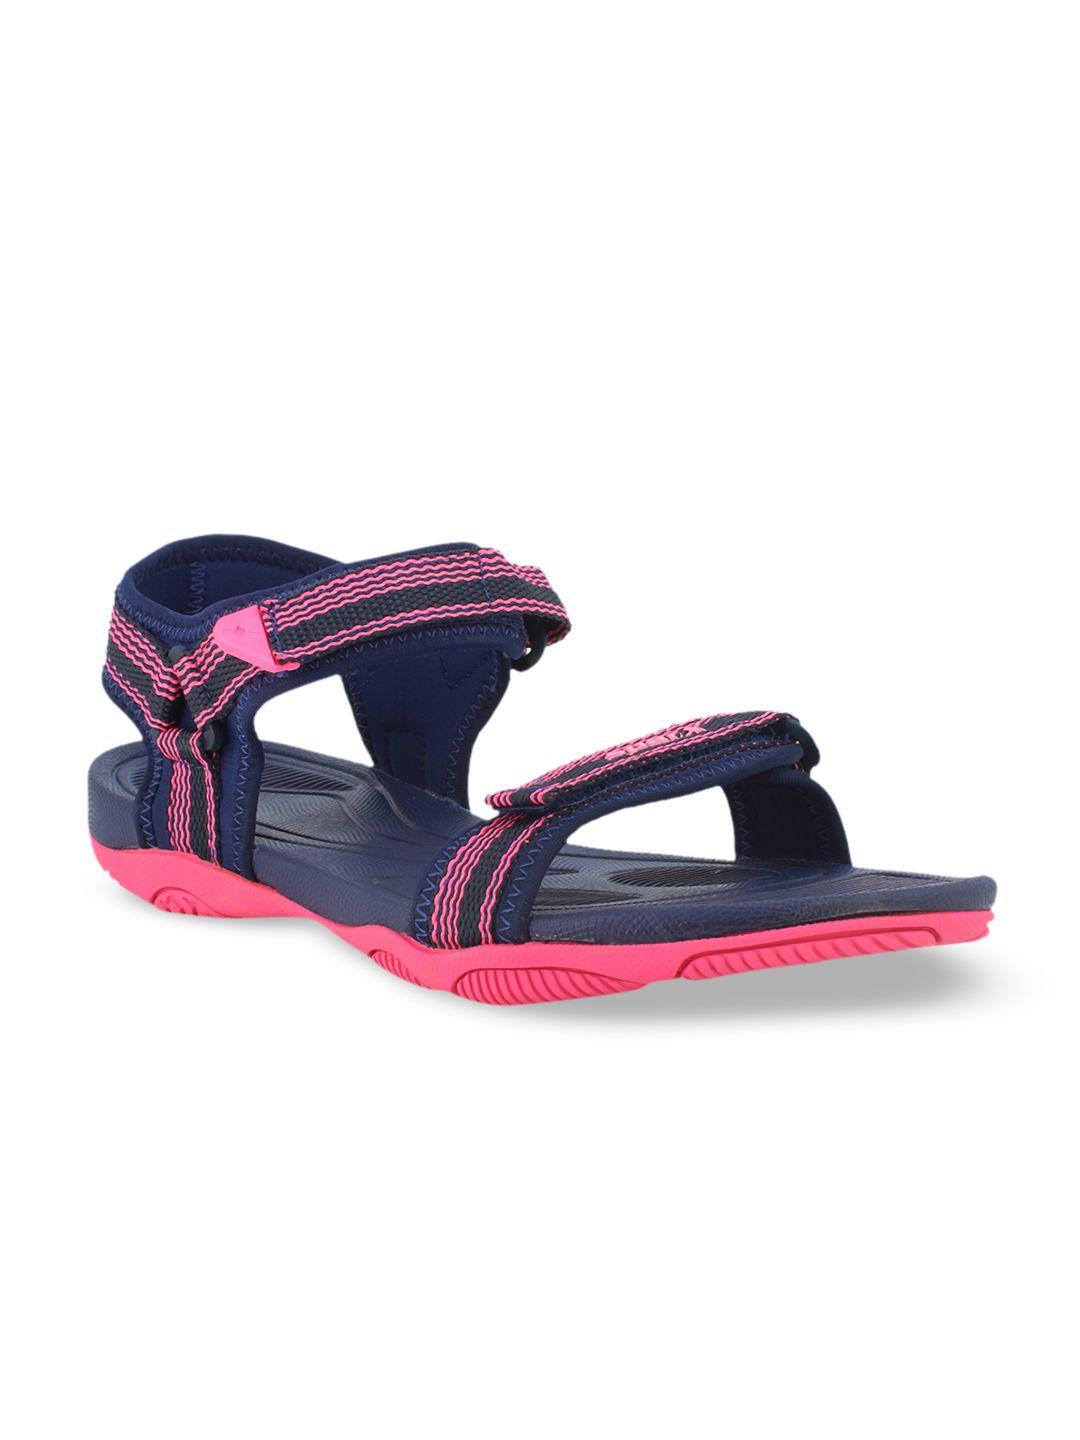 sparx women navy blue & pink floater sandals